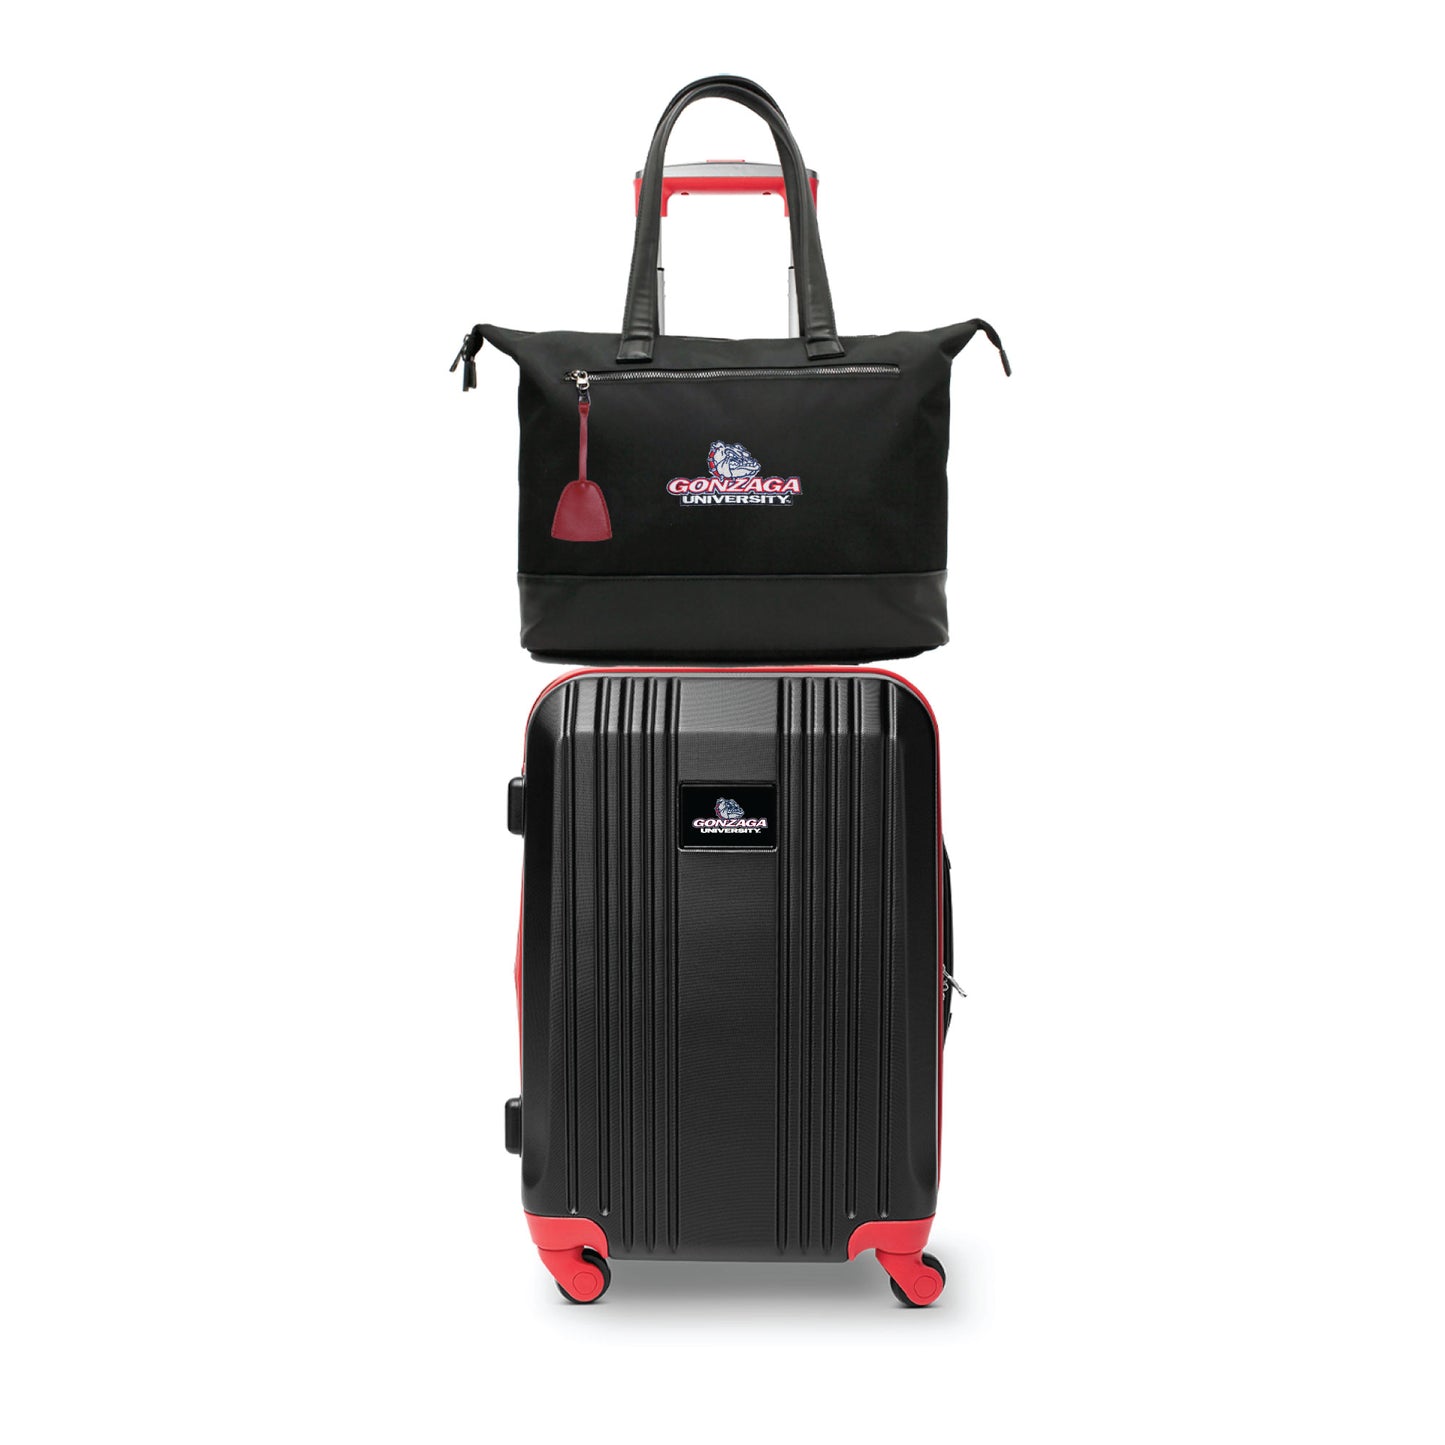 Gonzaga University Bulldogs Premium Laptop Tote Bag and Luggage Set